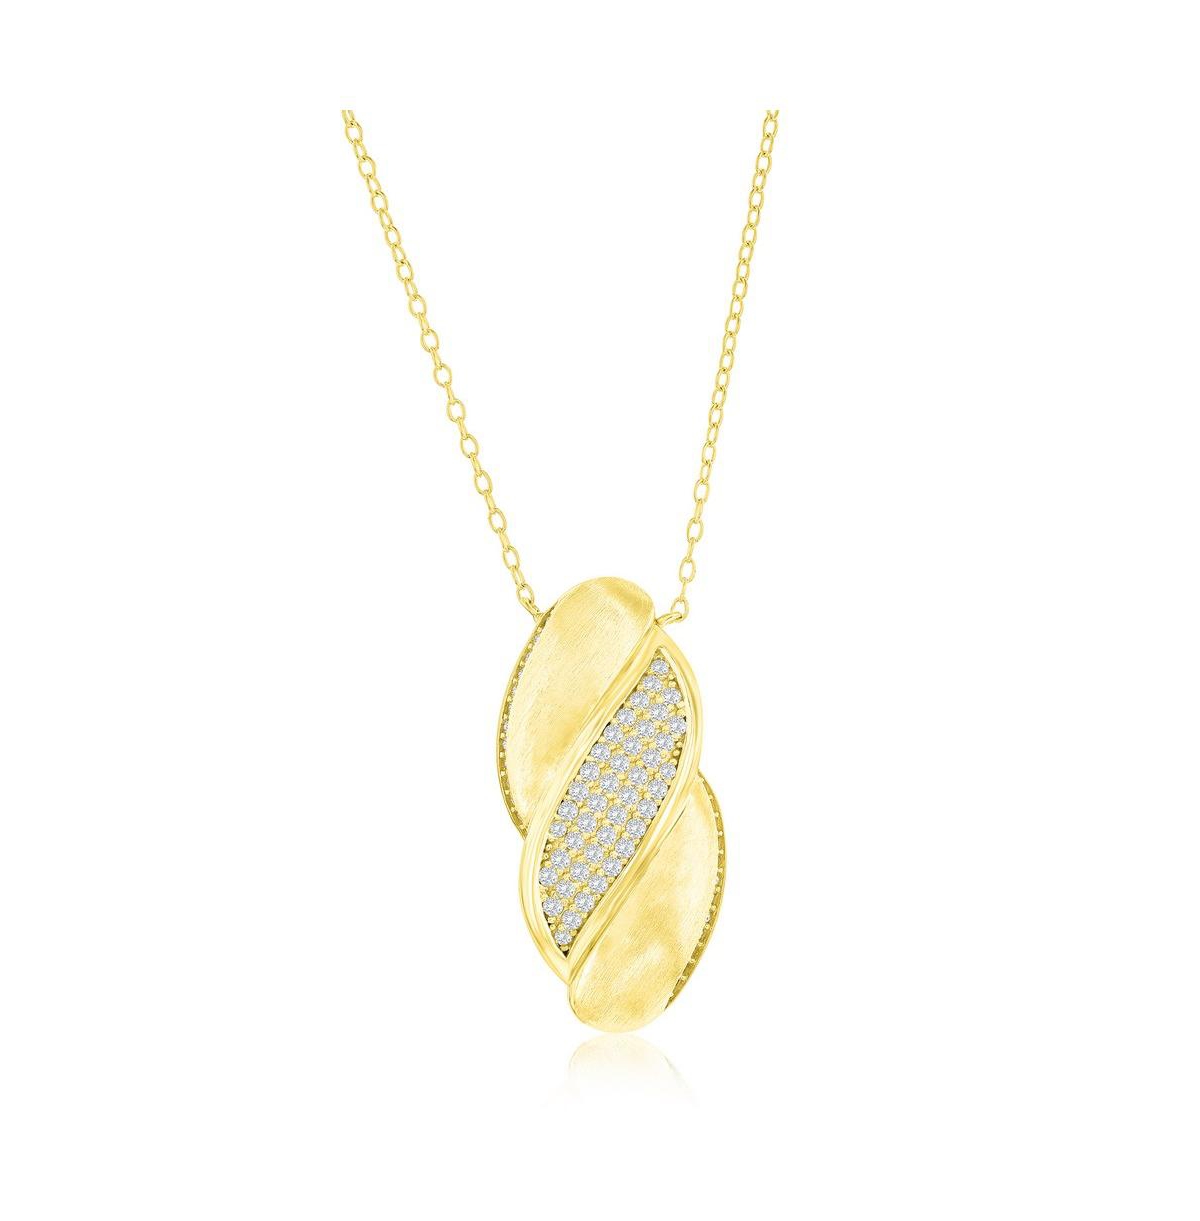 Gold Plated Over Sterling Silver Brushed Cz Wave Design Necklace - Gold